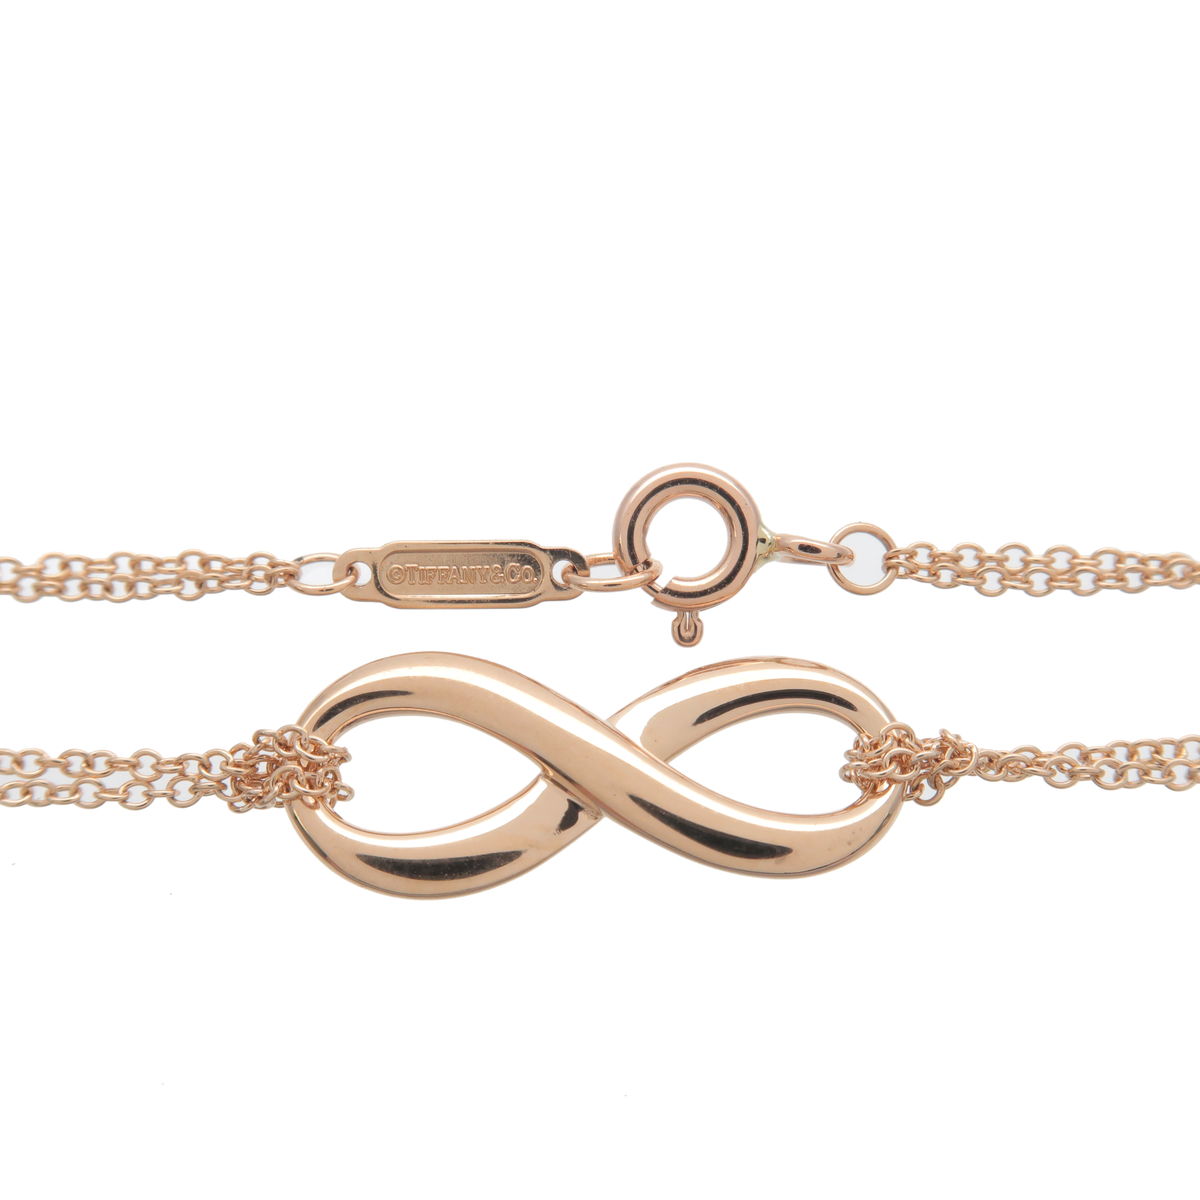 Tiffany&Co. Tiffany Infinity Bracelet K18PG 750 Rose Gold